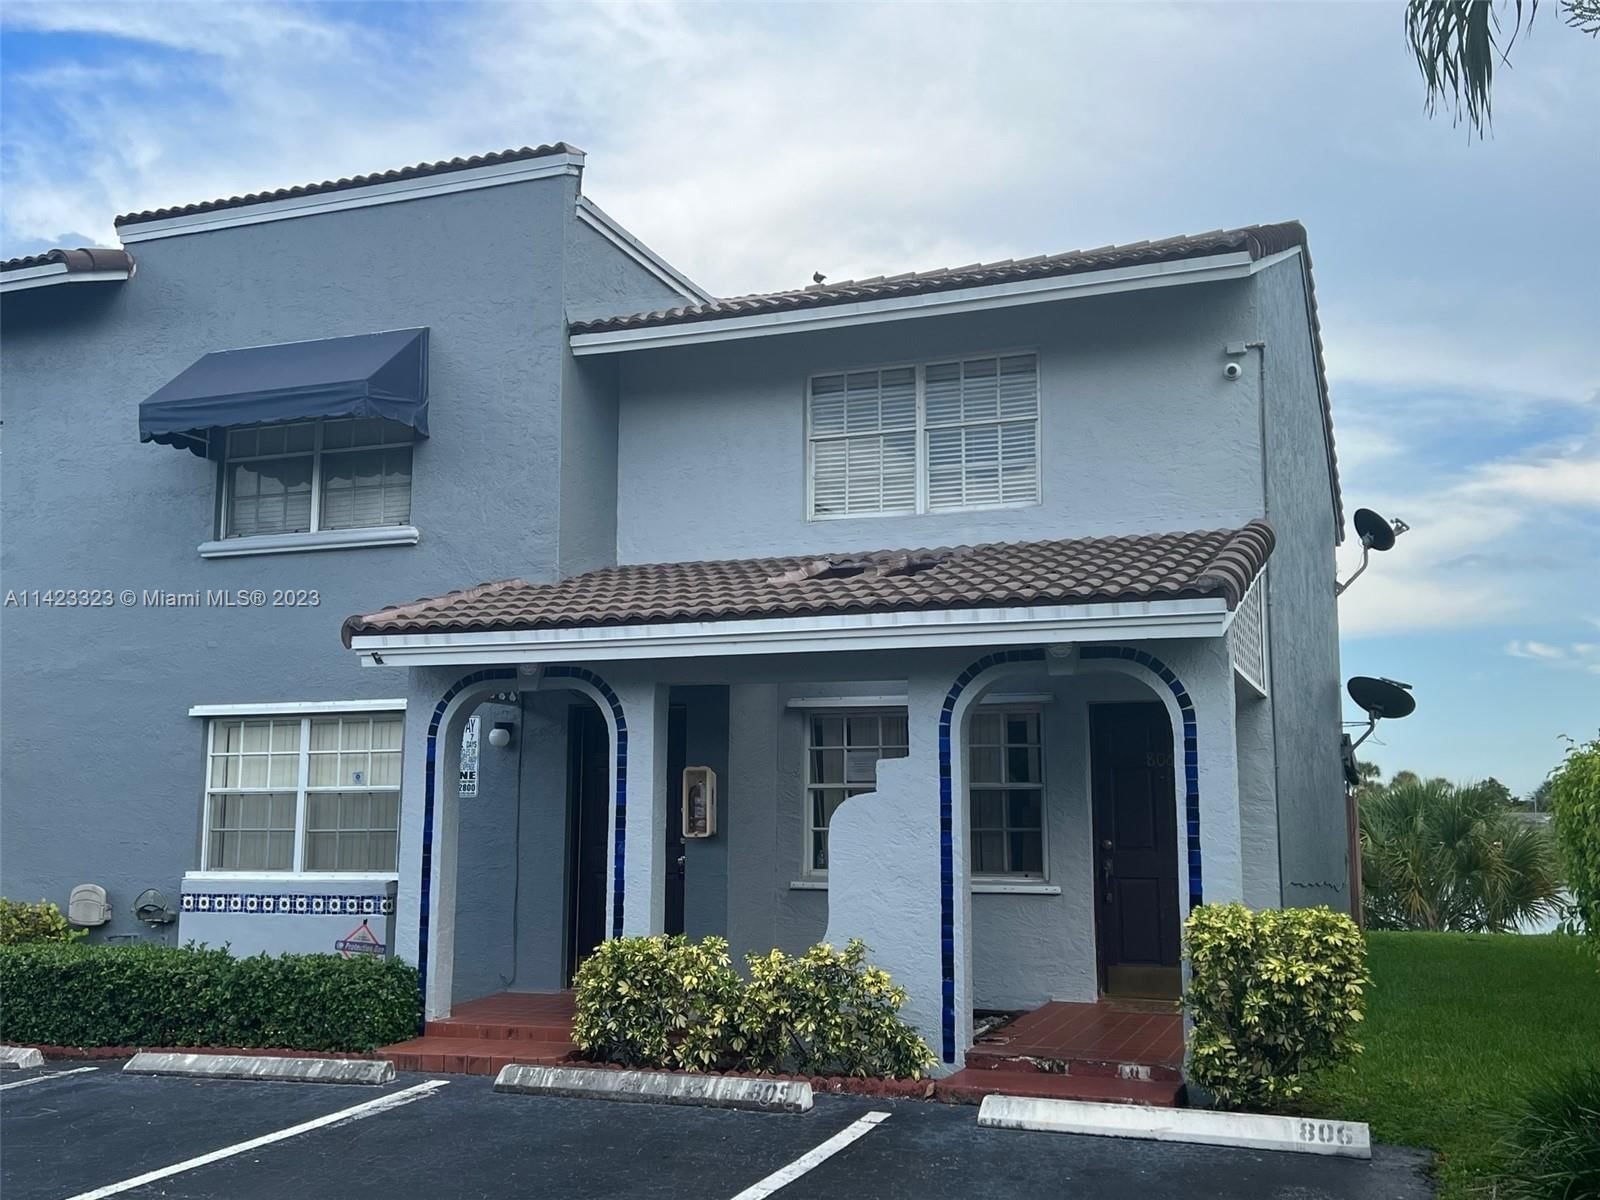 Real estate property located at 6940 173rd Dr #805, Miami-Dade County, LAGO DEL REY CONDO, Hialeah, FL